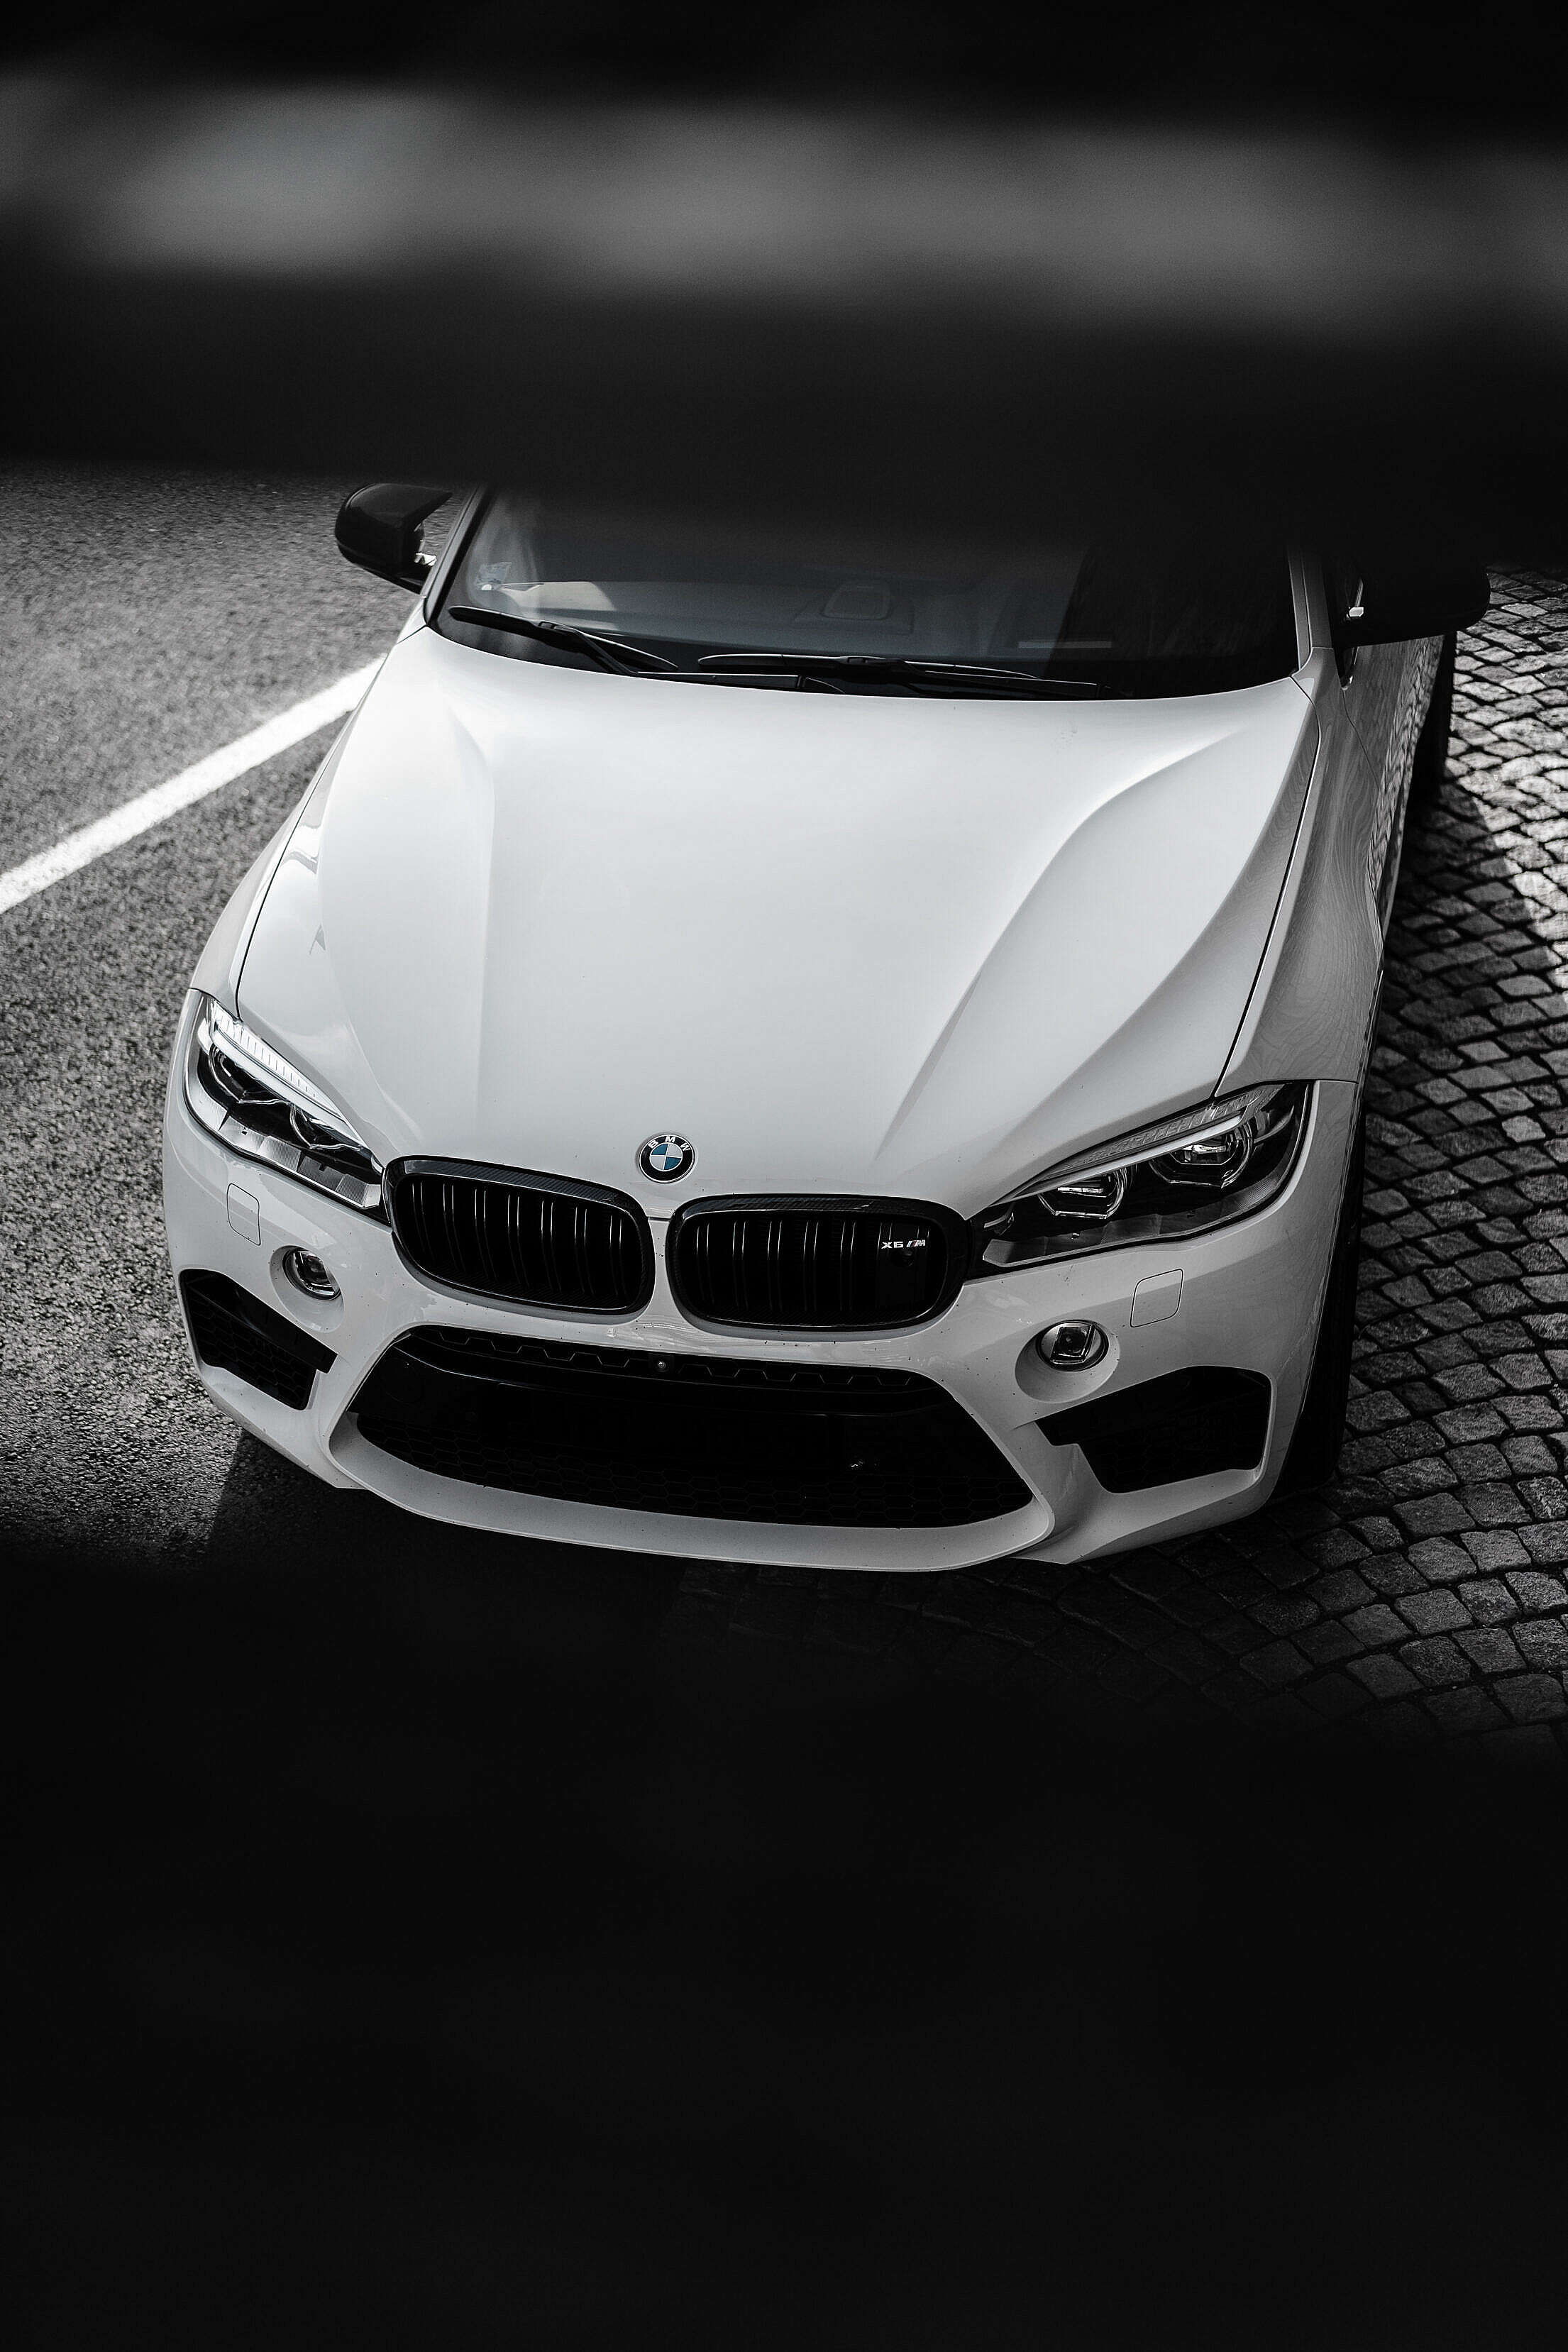  BMW Hintergrundbild 2210x3315. White BMW X6M Wallpaper Free